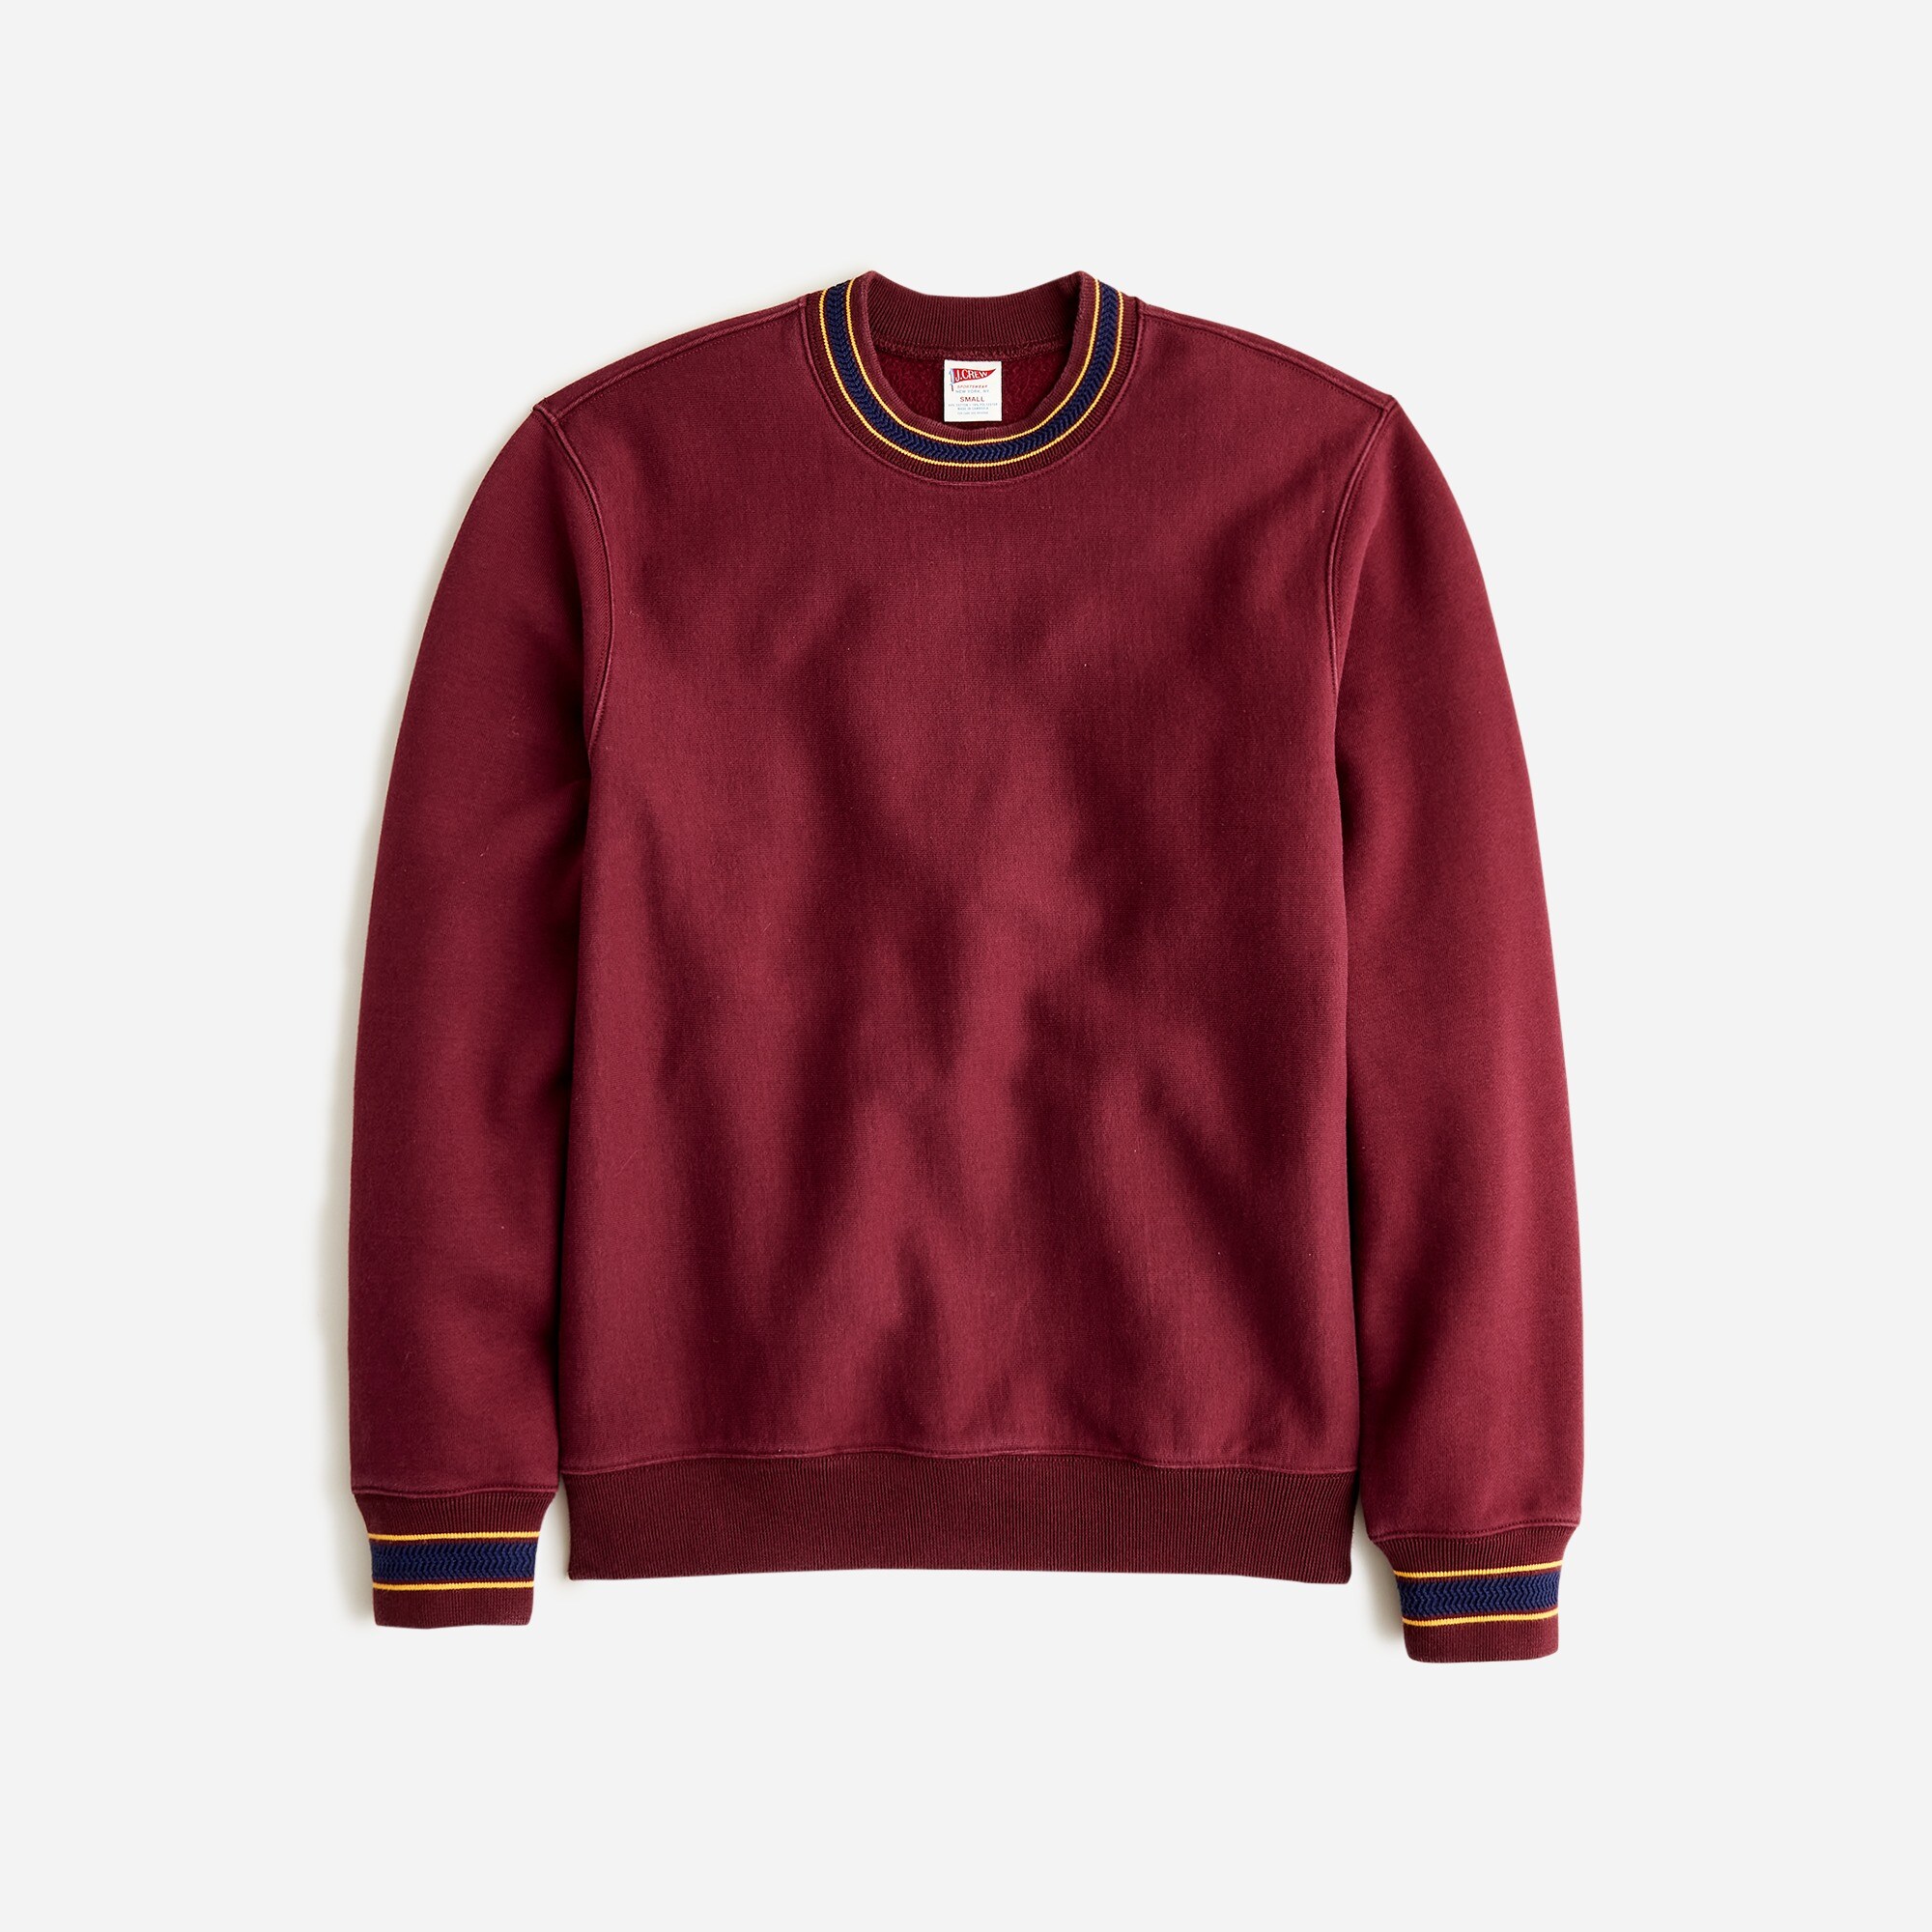  Heritage 14 oz. fleece sweatshirt with jacquard rib trim